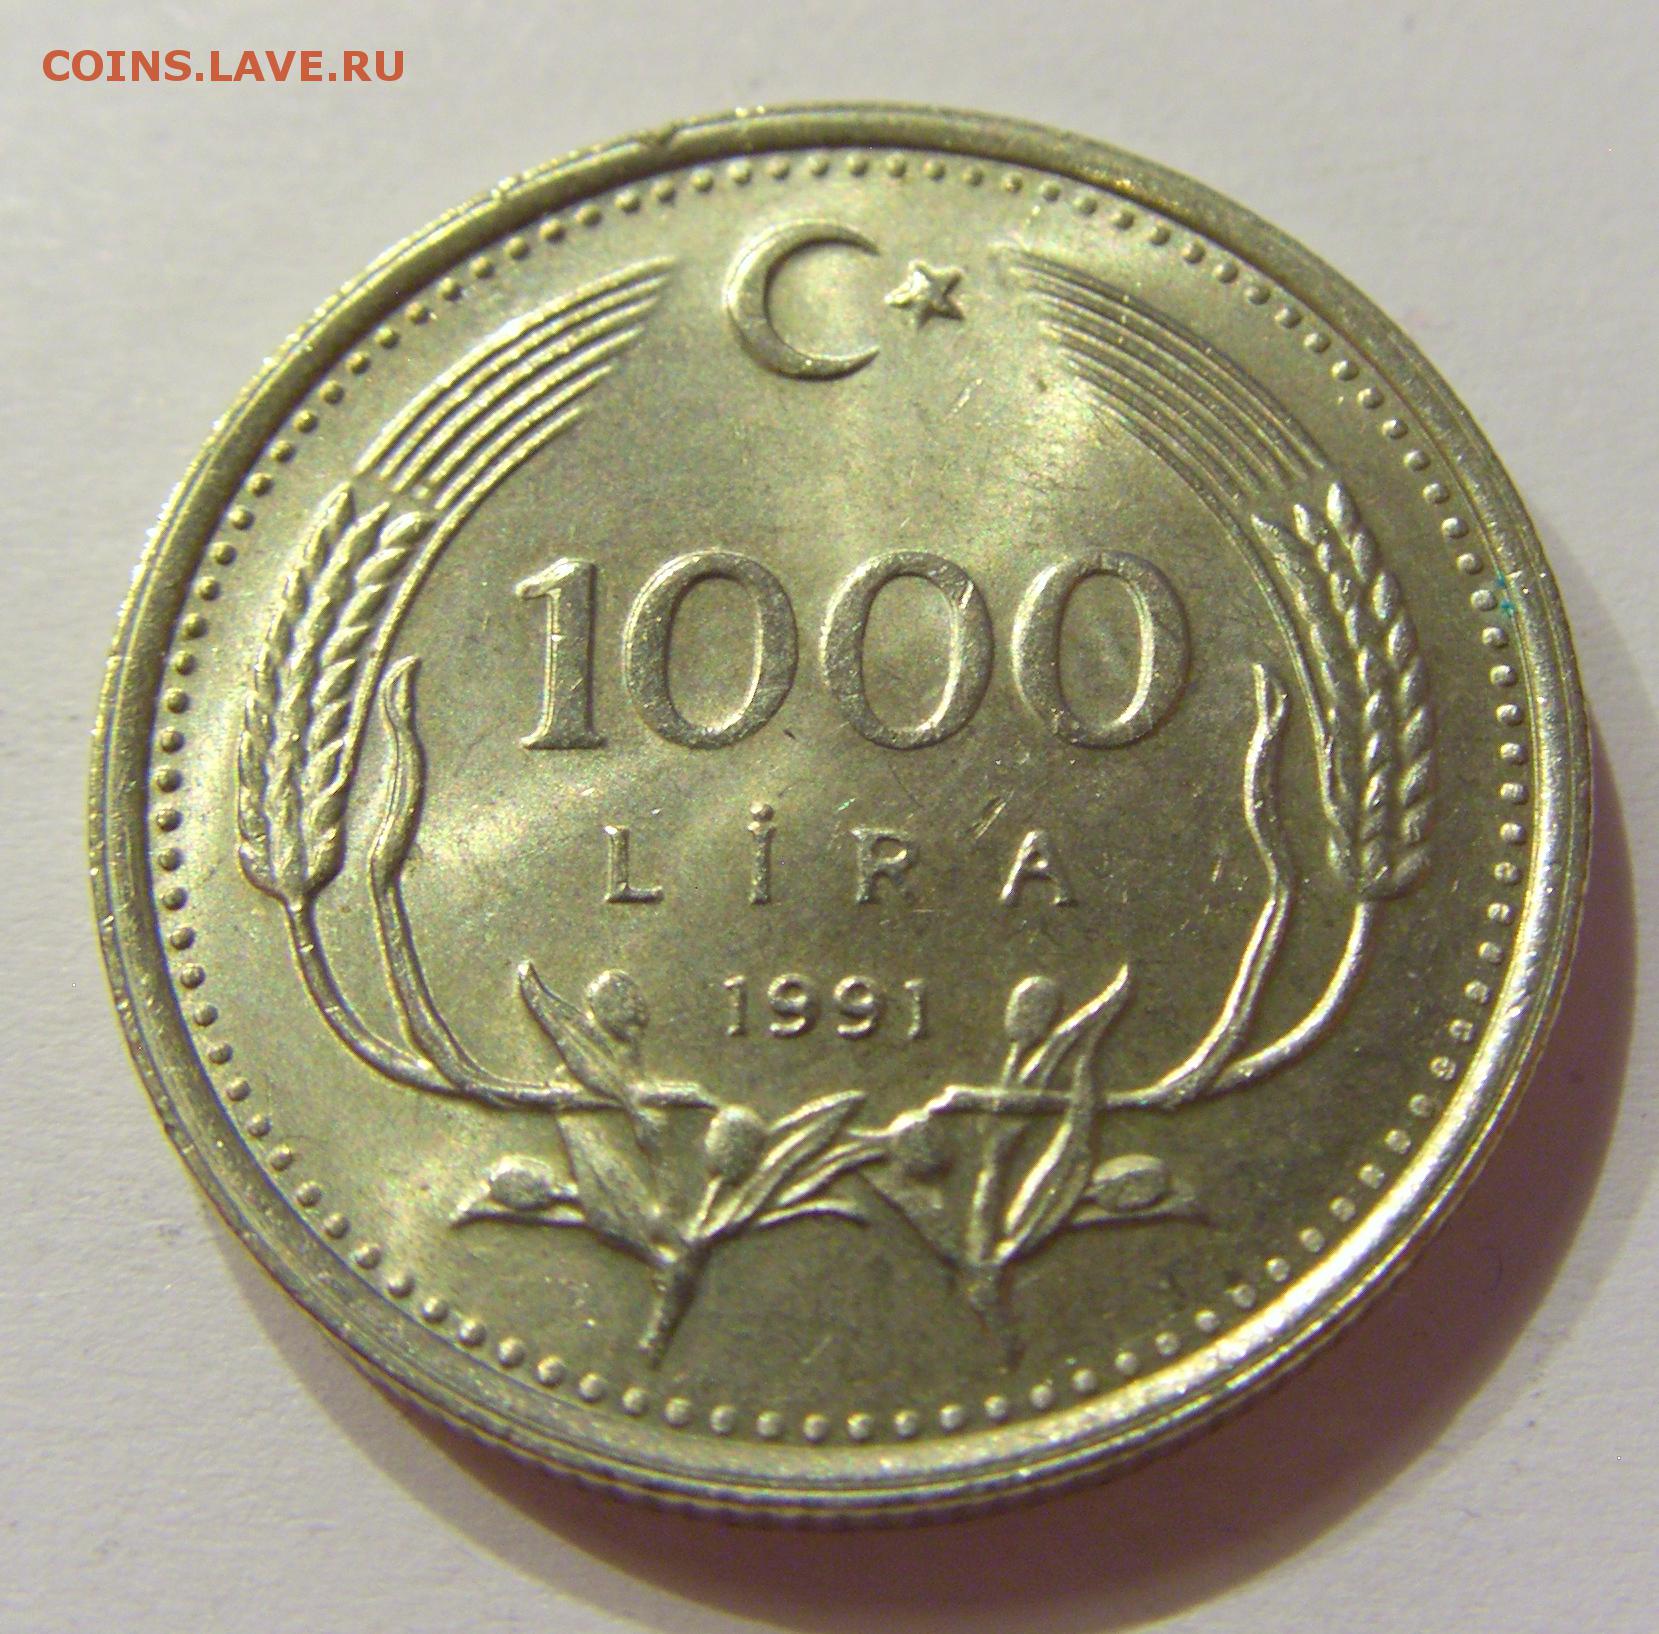 300 турецких в рублях. 1000 Лир Турция в рублях. 1000 Лир монета. 1000 Рублей в турецких лирах. 1000 Копеек.